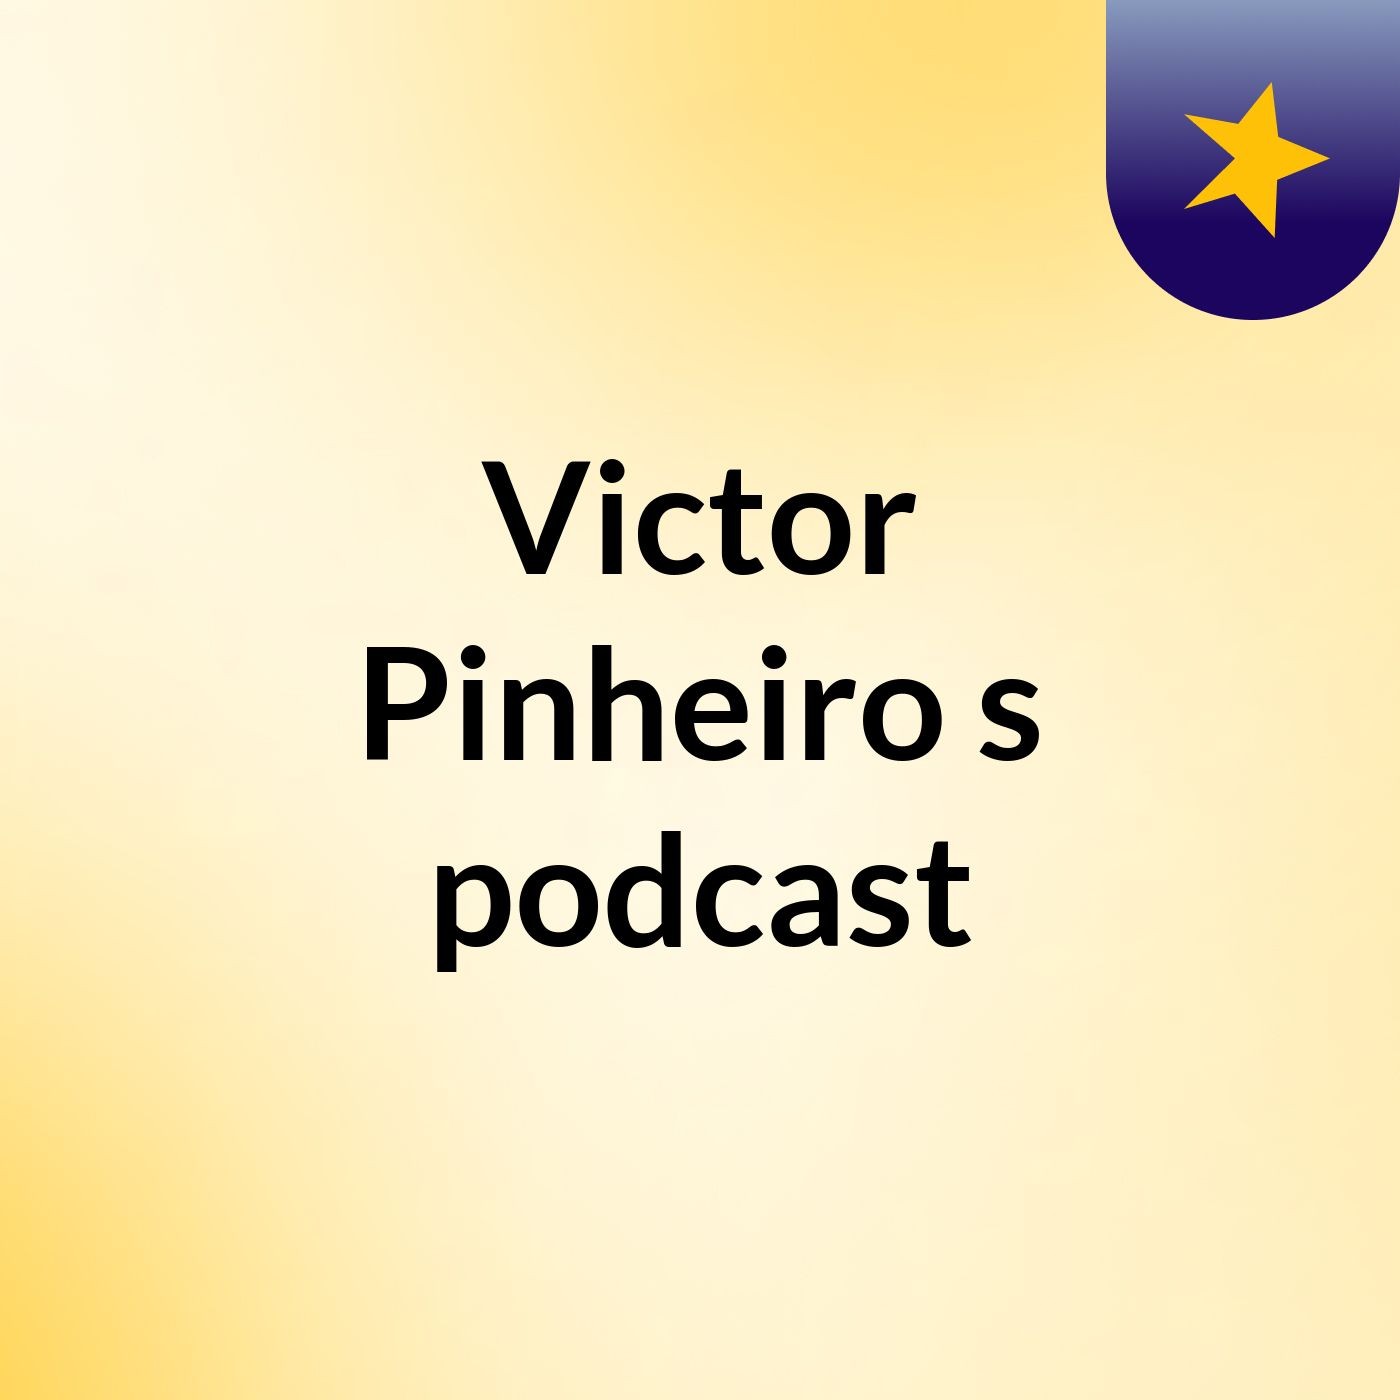 Victor Pinheiro's podcast